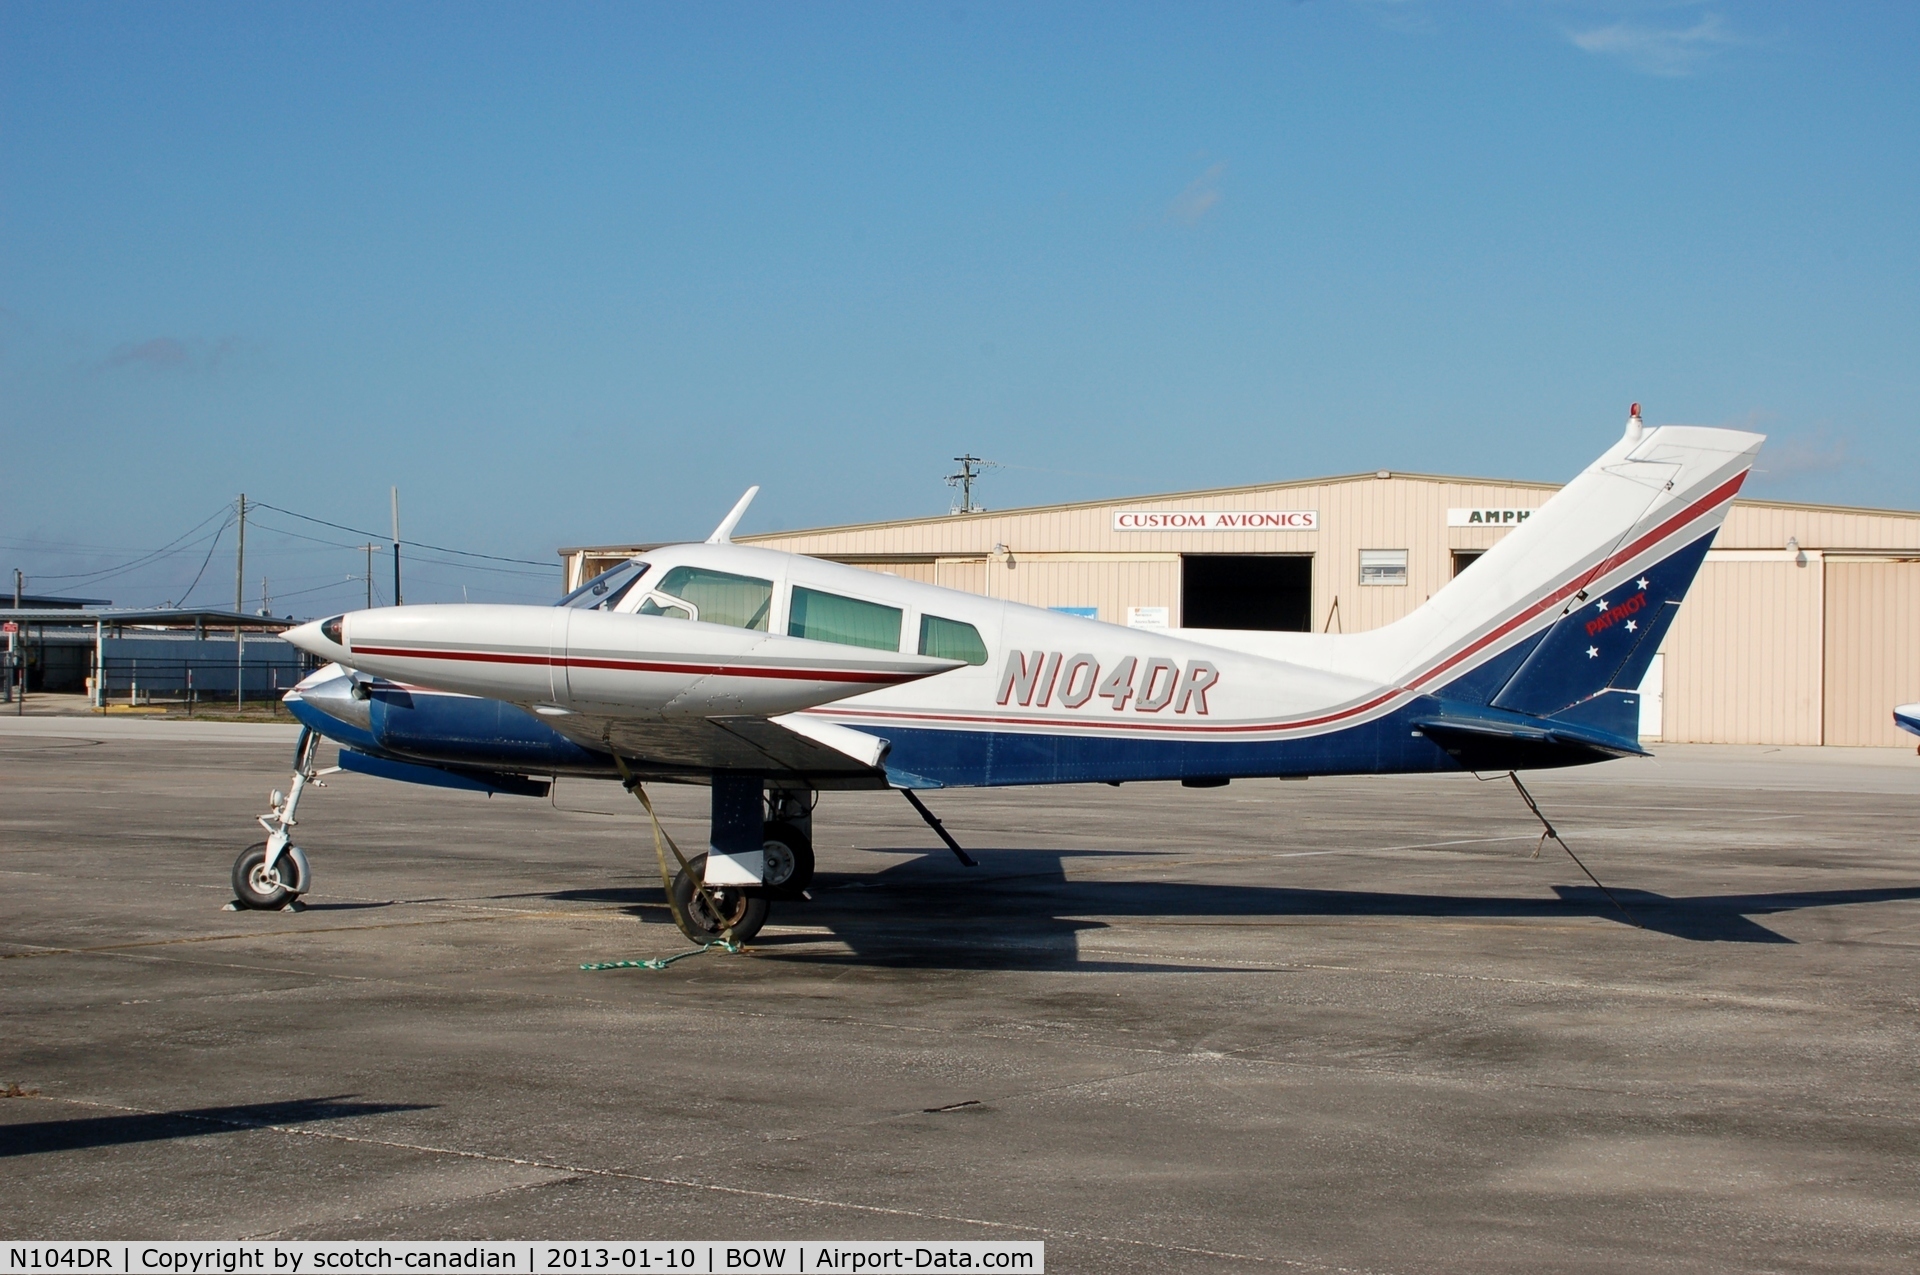 N104DR, 1962 Cessna 310H C/N 310H0021, 1962 Cessna 310H, N104DR, at Bartow Municipal Airport, Bartow, FL